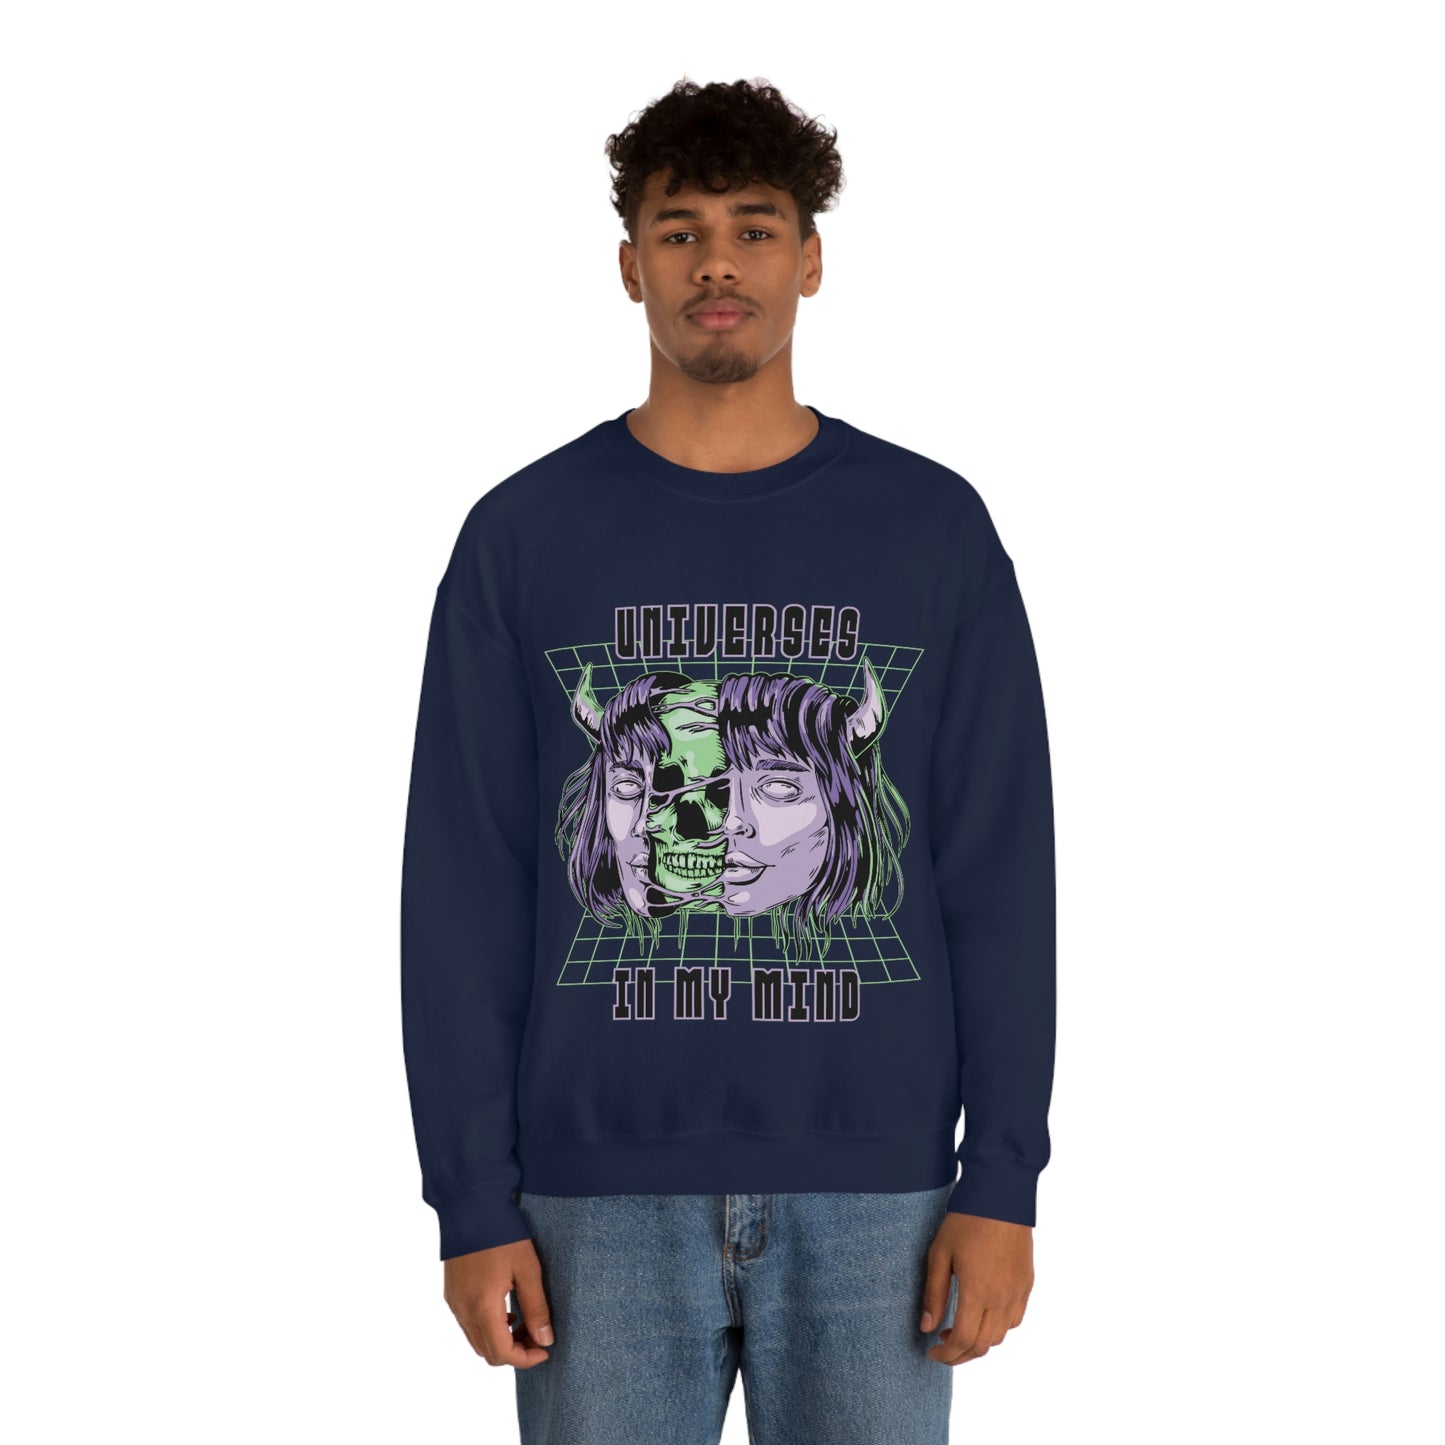 Universes In My Mind Pastel Goth Aesthetic Cyber Sweatshirt